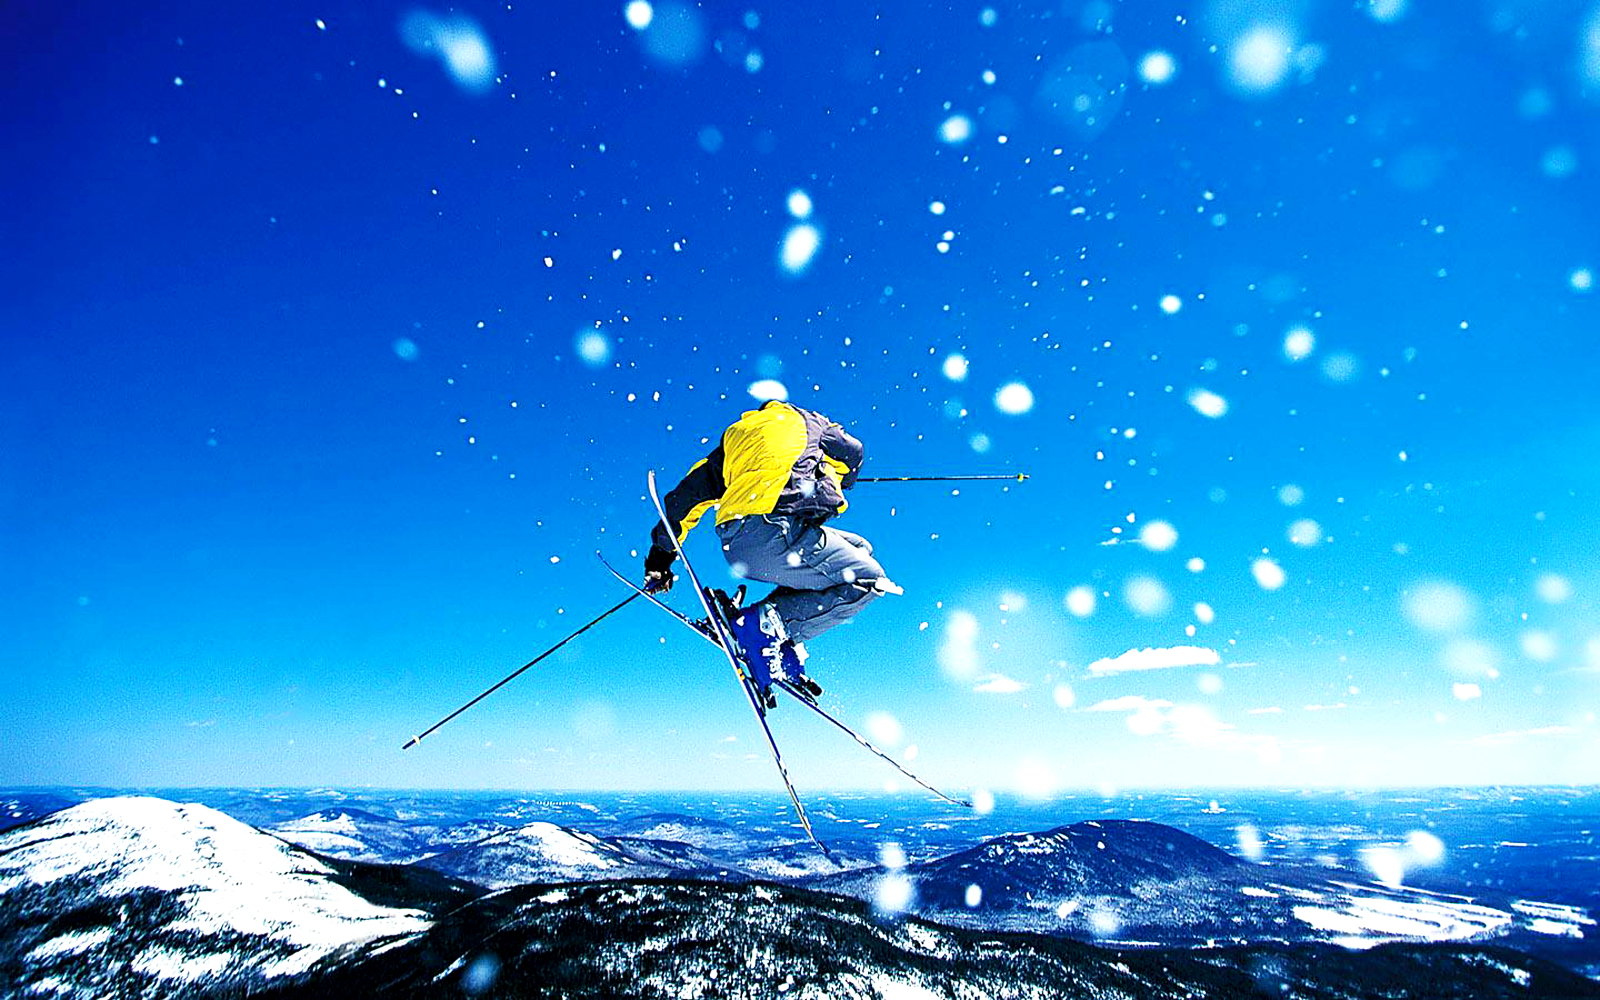 Skiing Winter Sports Hd Wallpapers Hd Wallpapers Afalchi Free images wallpape [afalchi.blogspot.com]